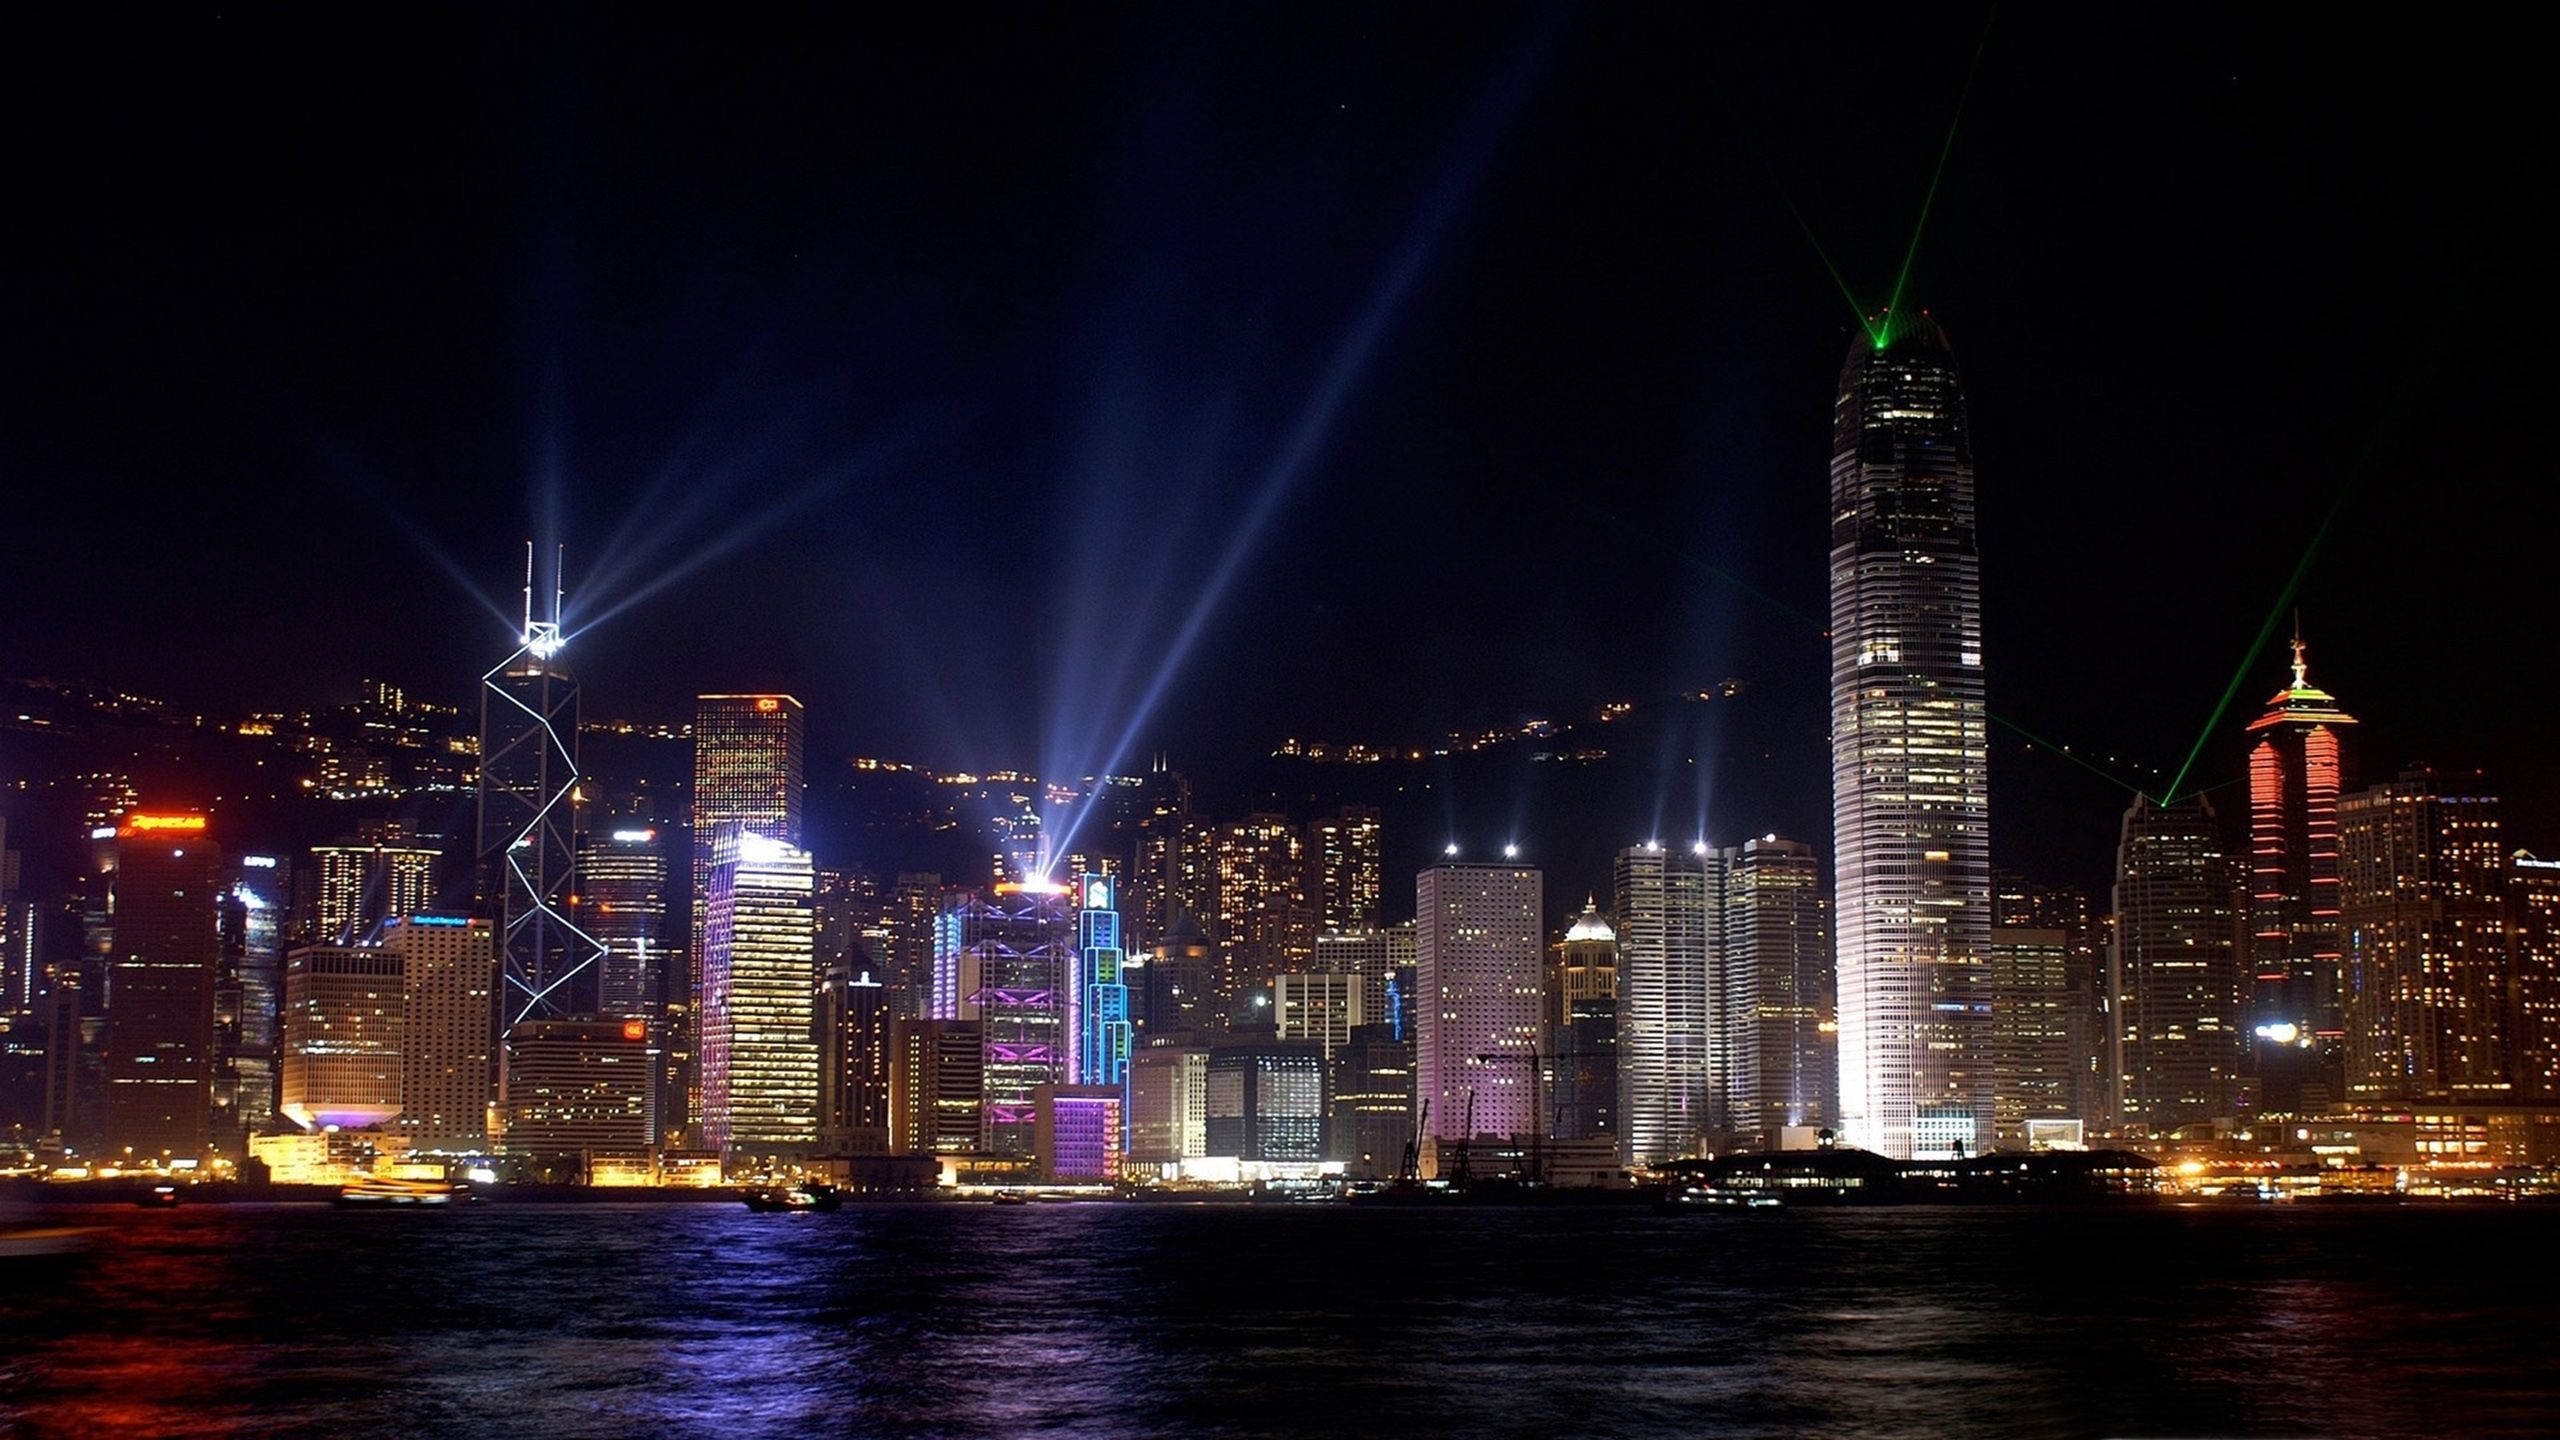 Hong Kong Victoria Harbour The City At Night Night Lighting Tall Buildings And Skyscrapers Desktop Wallpaper HD 2560x1440, Wallpaper13.com